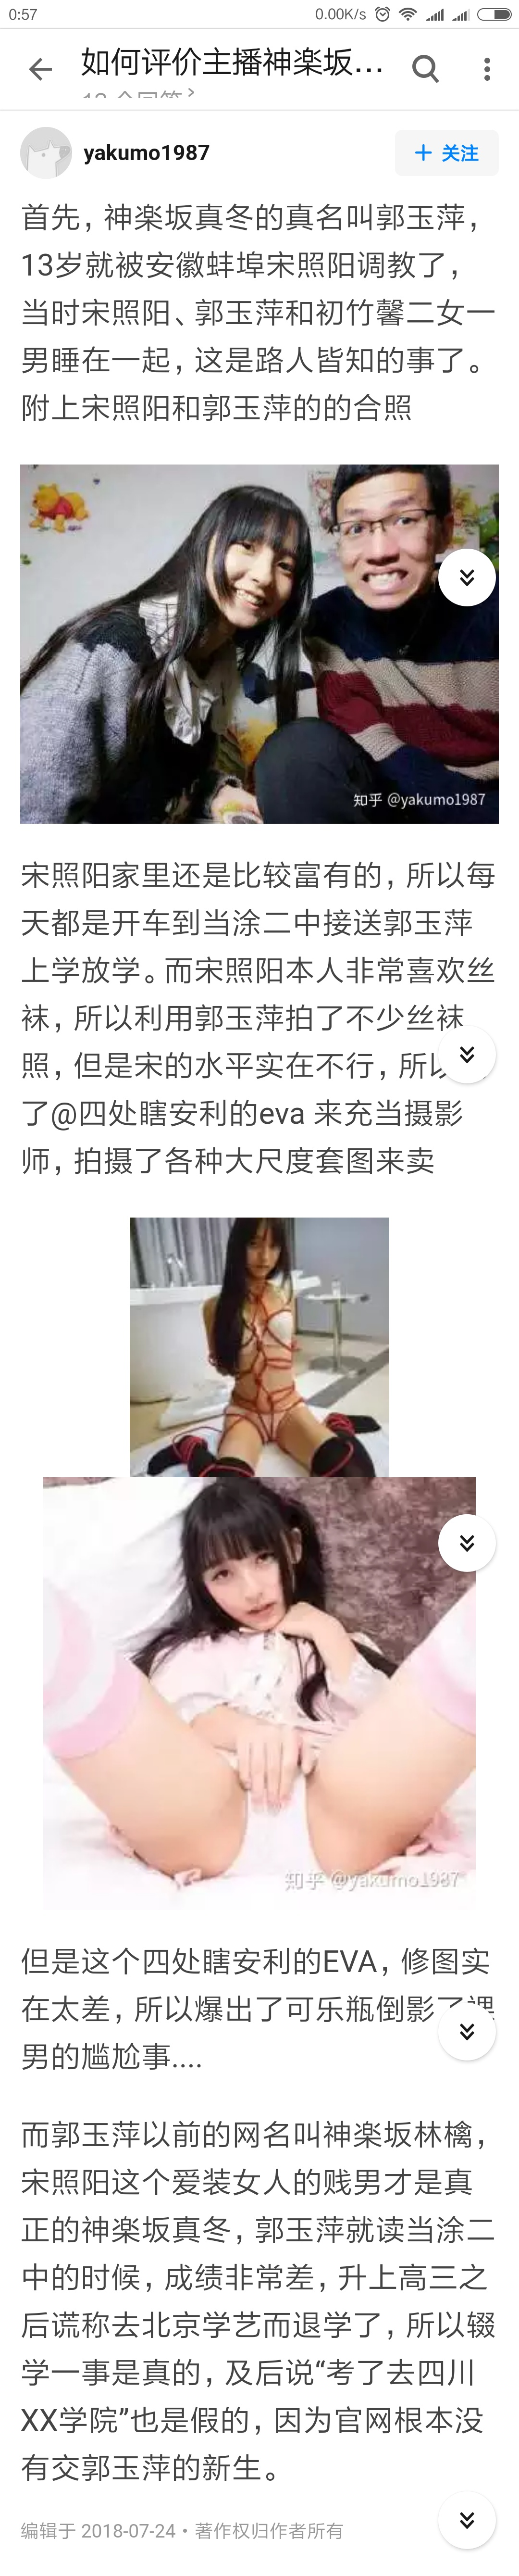 Screenshot_2018-09-30-00-57-40-953_com_zhihu_android.png